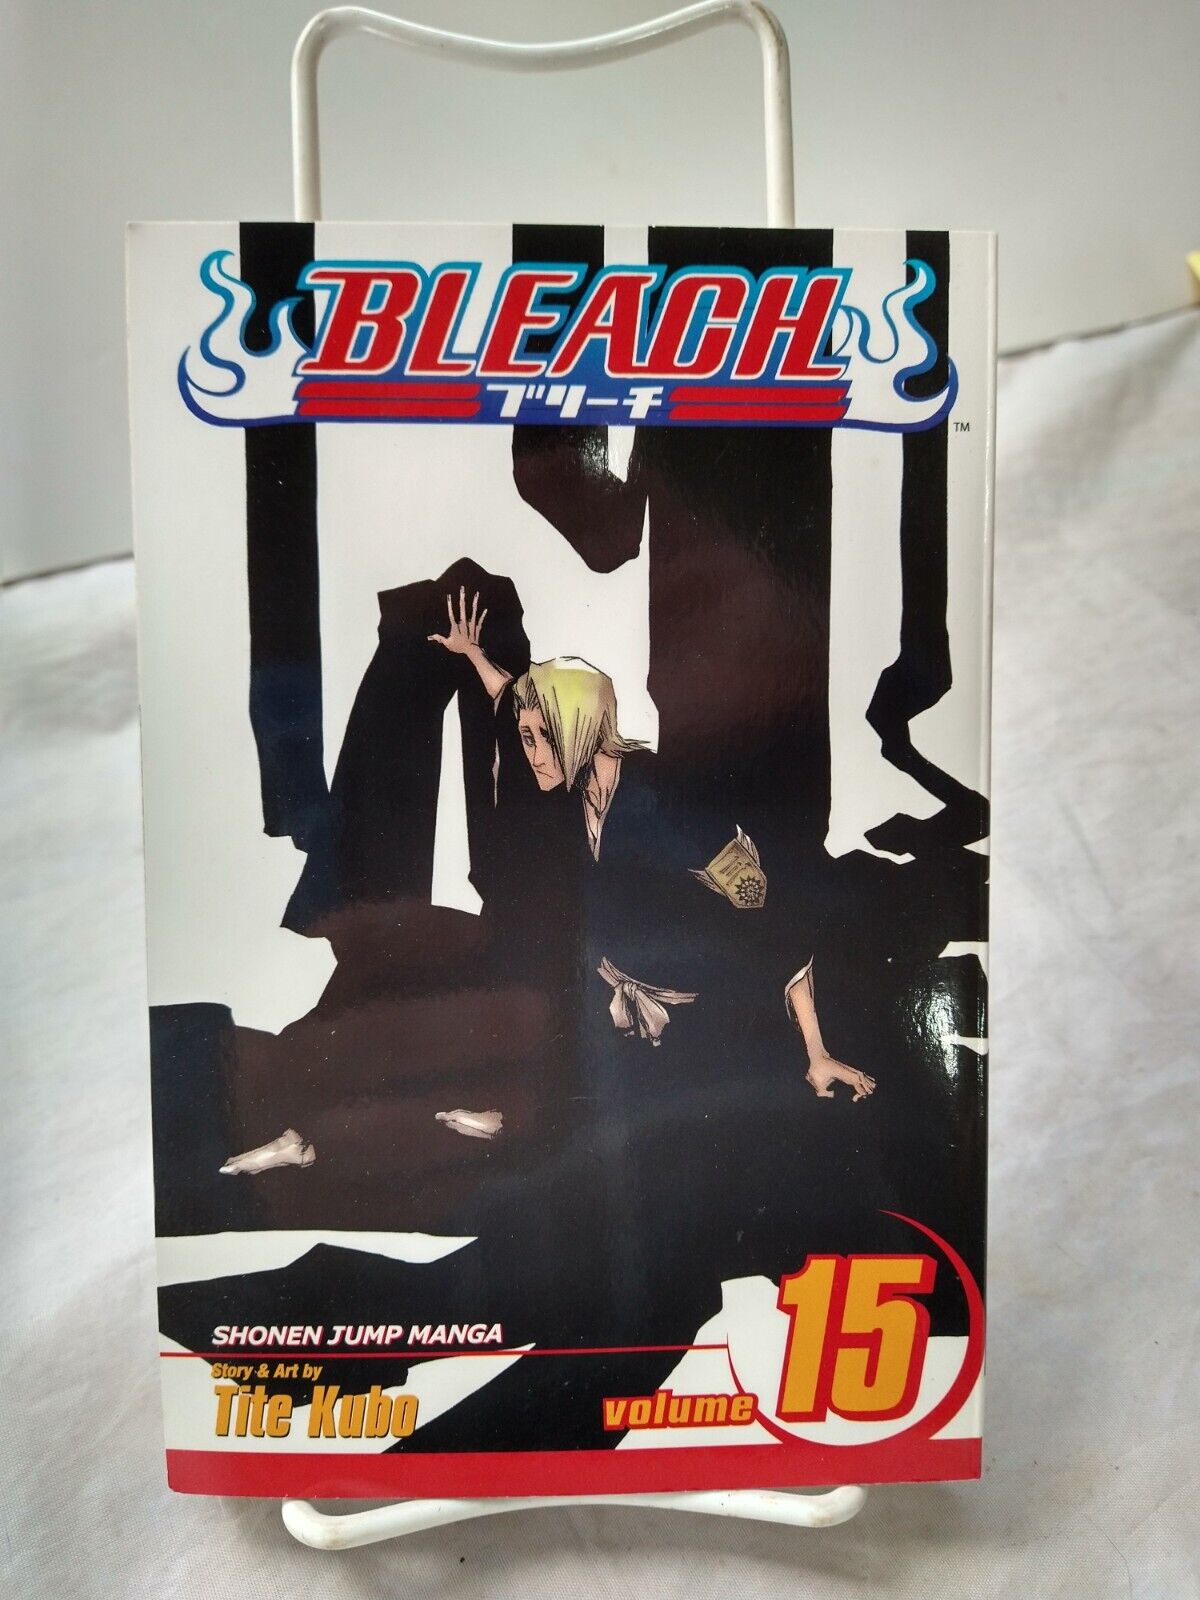 Bleach Volume 15 Paperback Tite Kubo Shonen Jump Manga